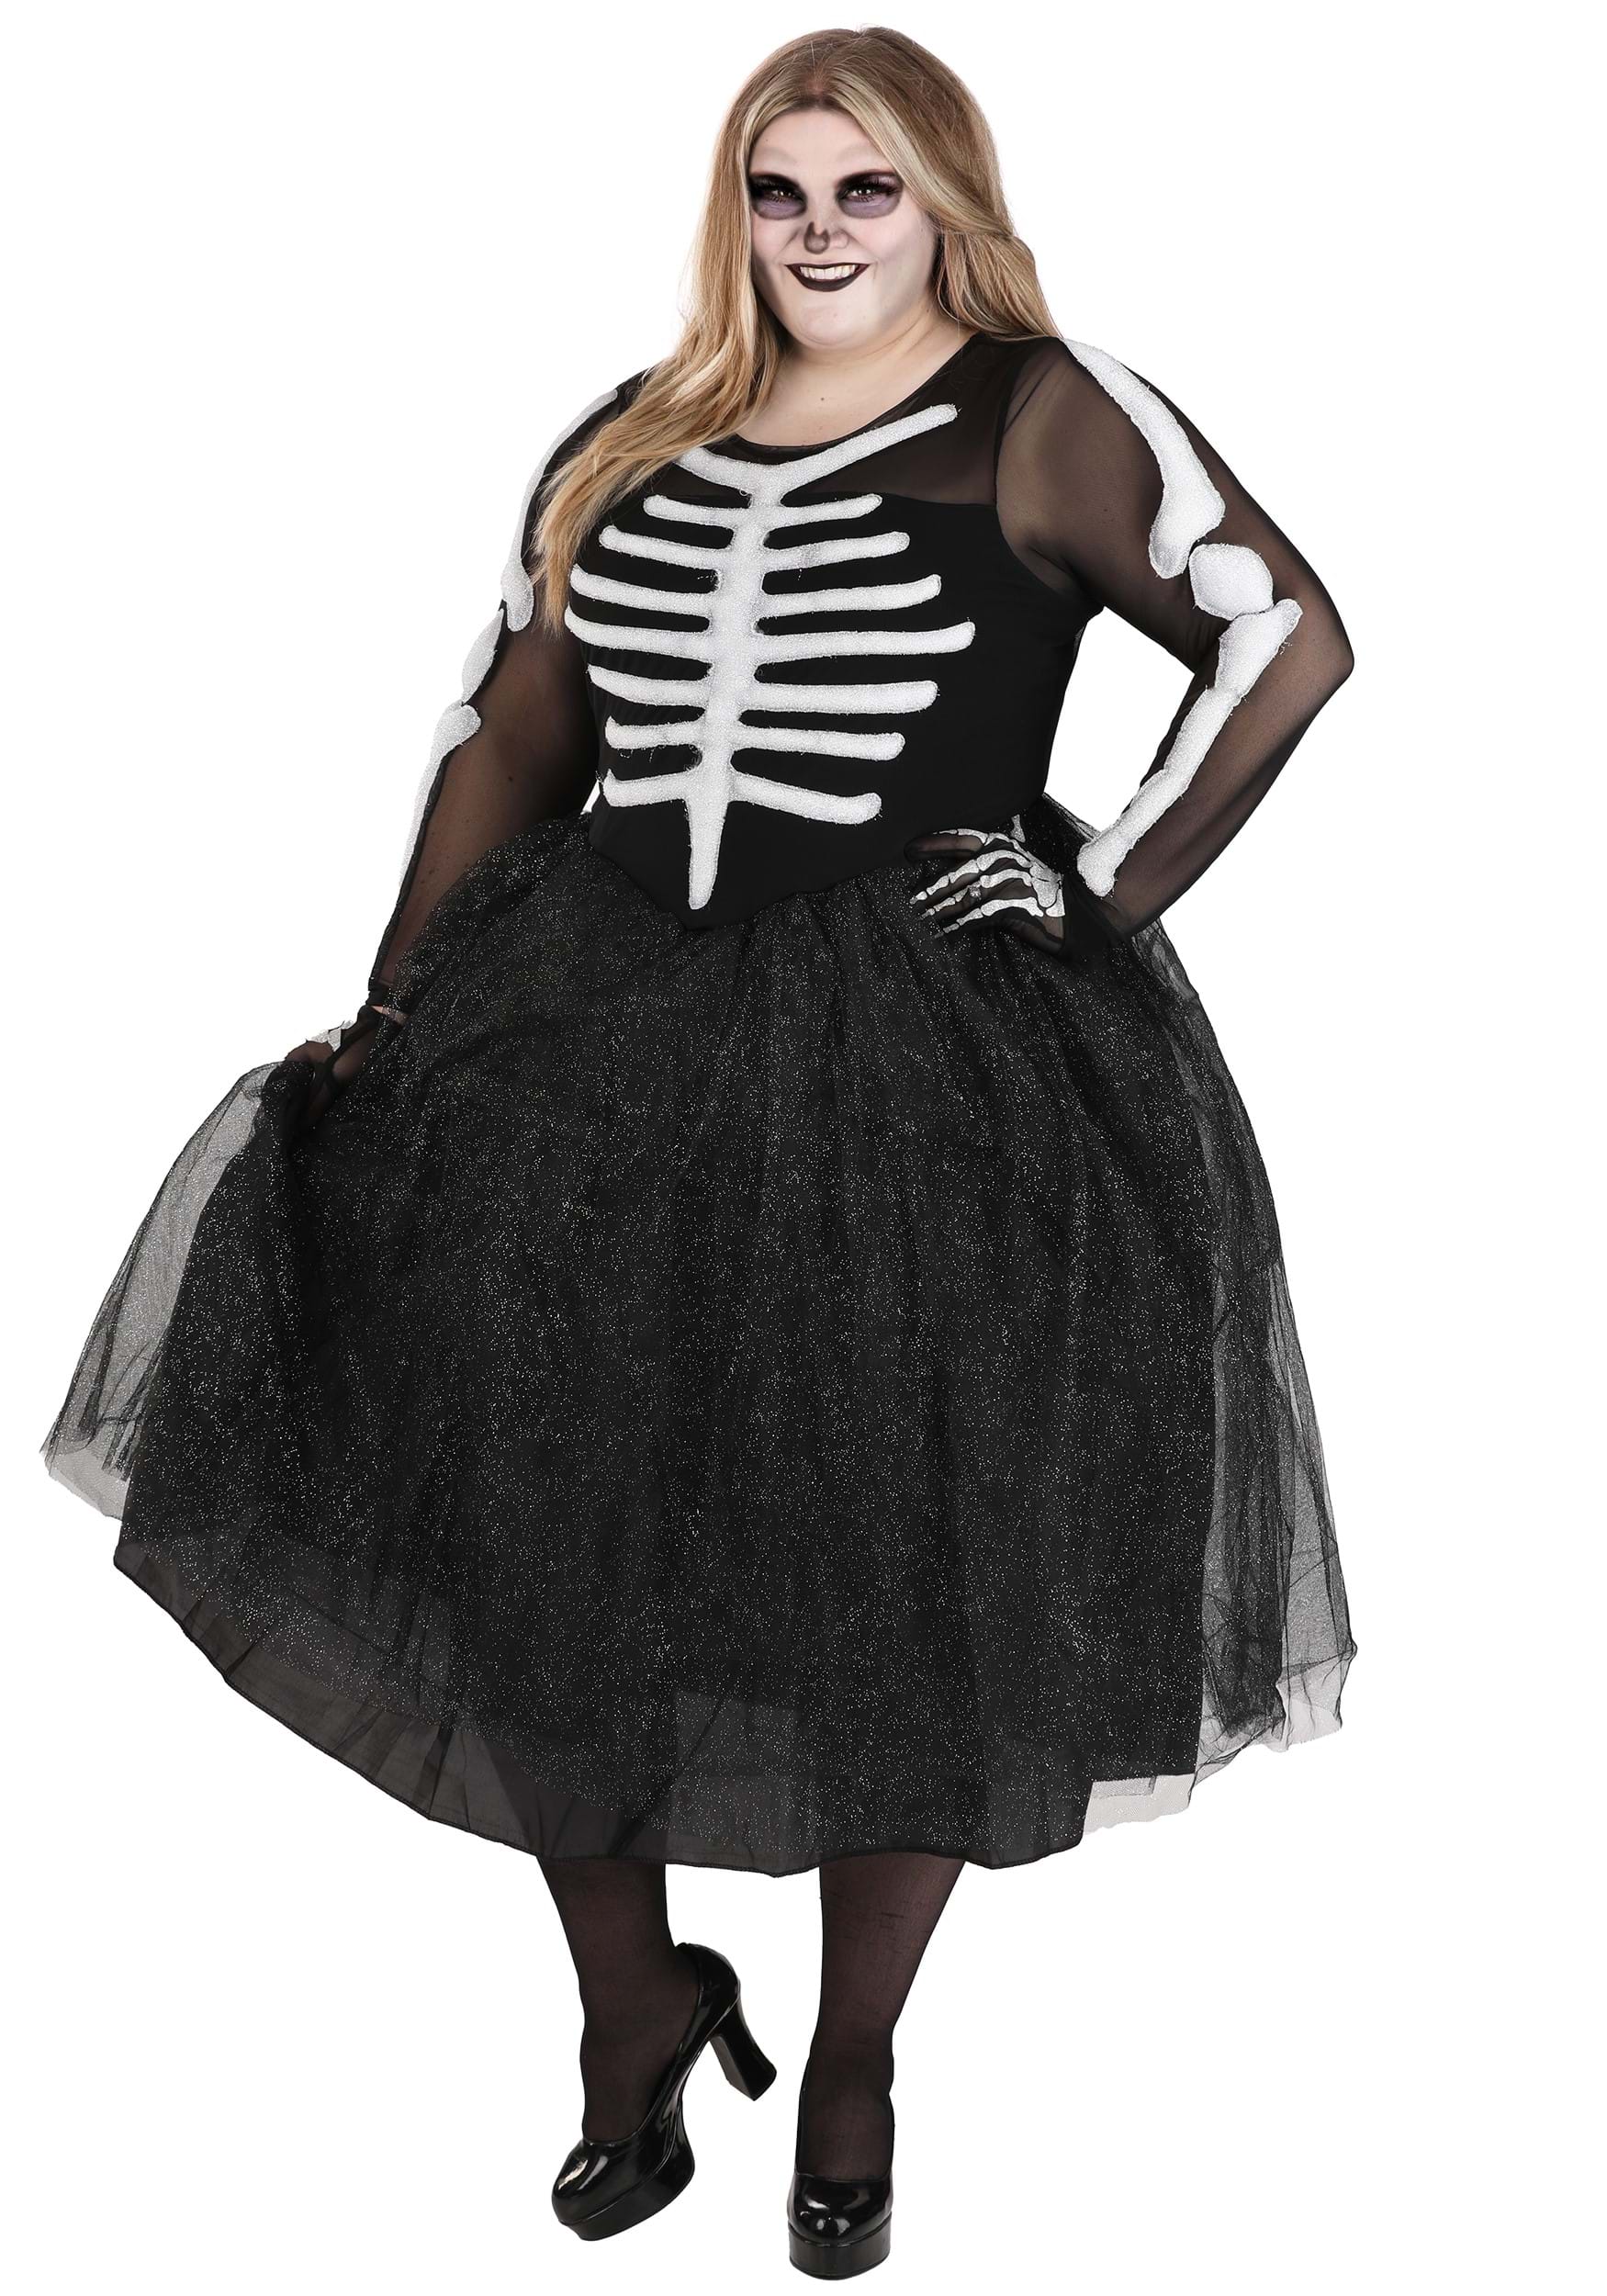 Photos - Fancy Dress FUN Costumes Skeleton Beauty Plus Size Costume for Women Black/White F